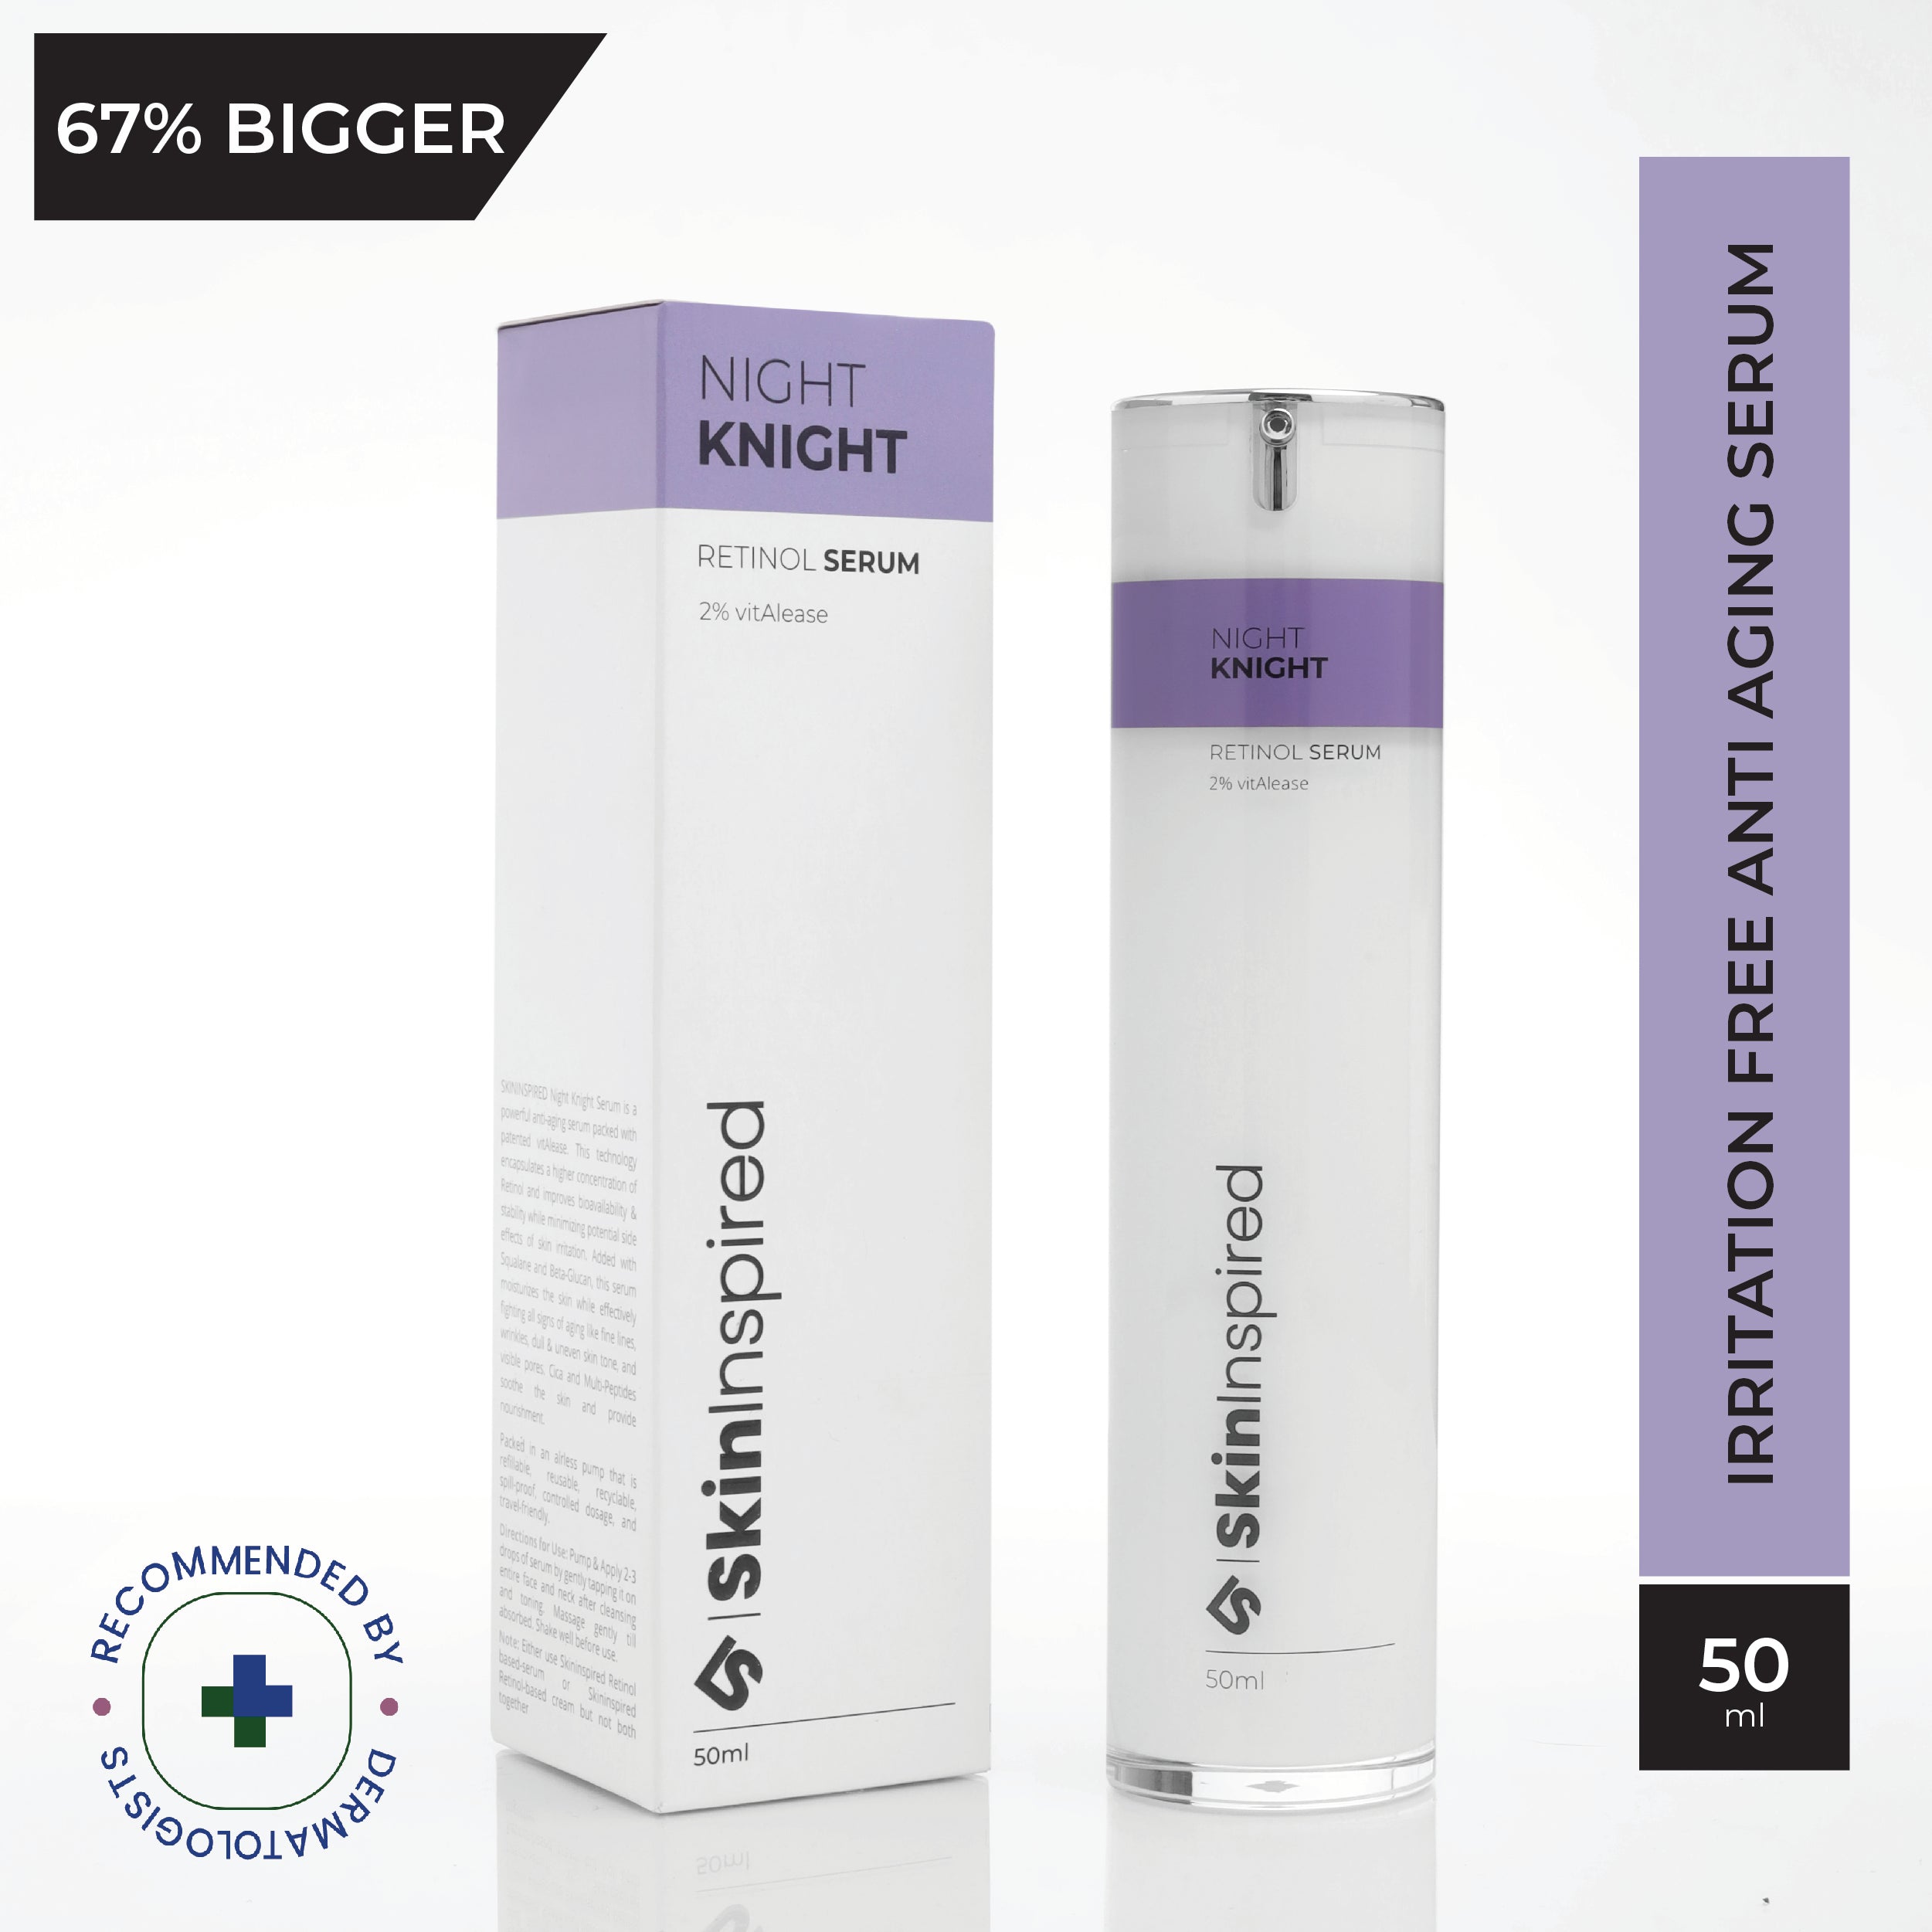 SkinInspired Night Knight Retinol (2% vitAlease) 50ml Face Serum For Anti Aging